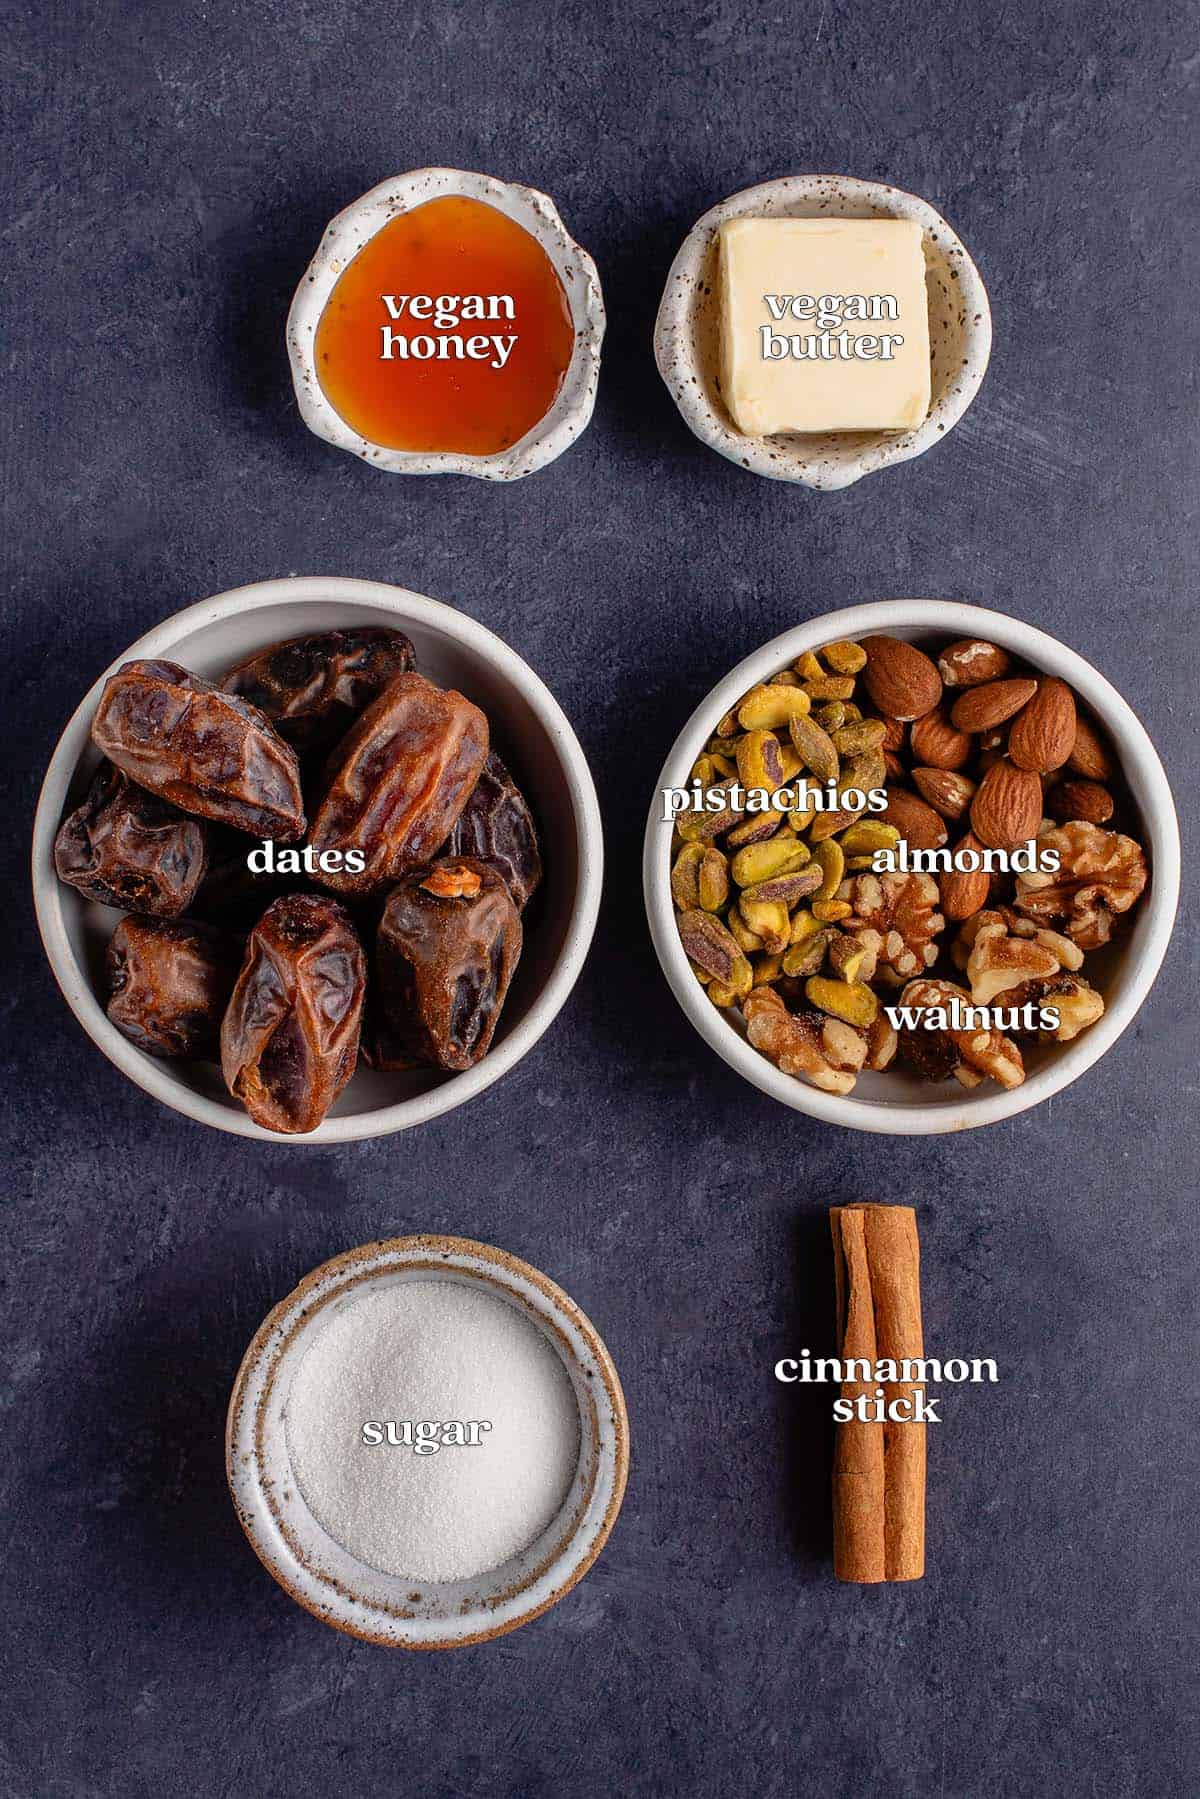 Ingredients: vegan honey, vegan butter, dates, pistachios, almonds, walnuts, sugar, cinnamon stick